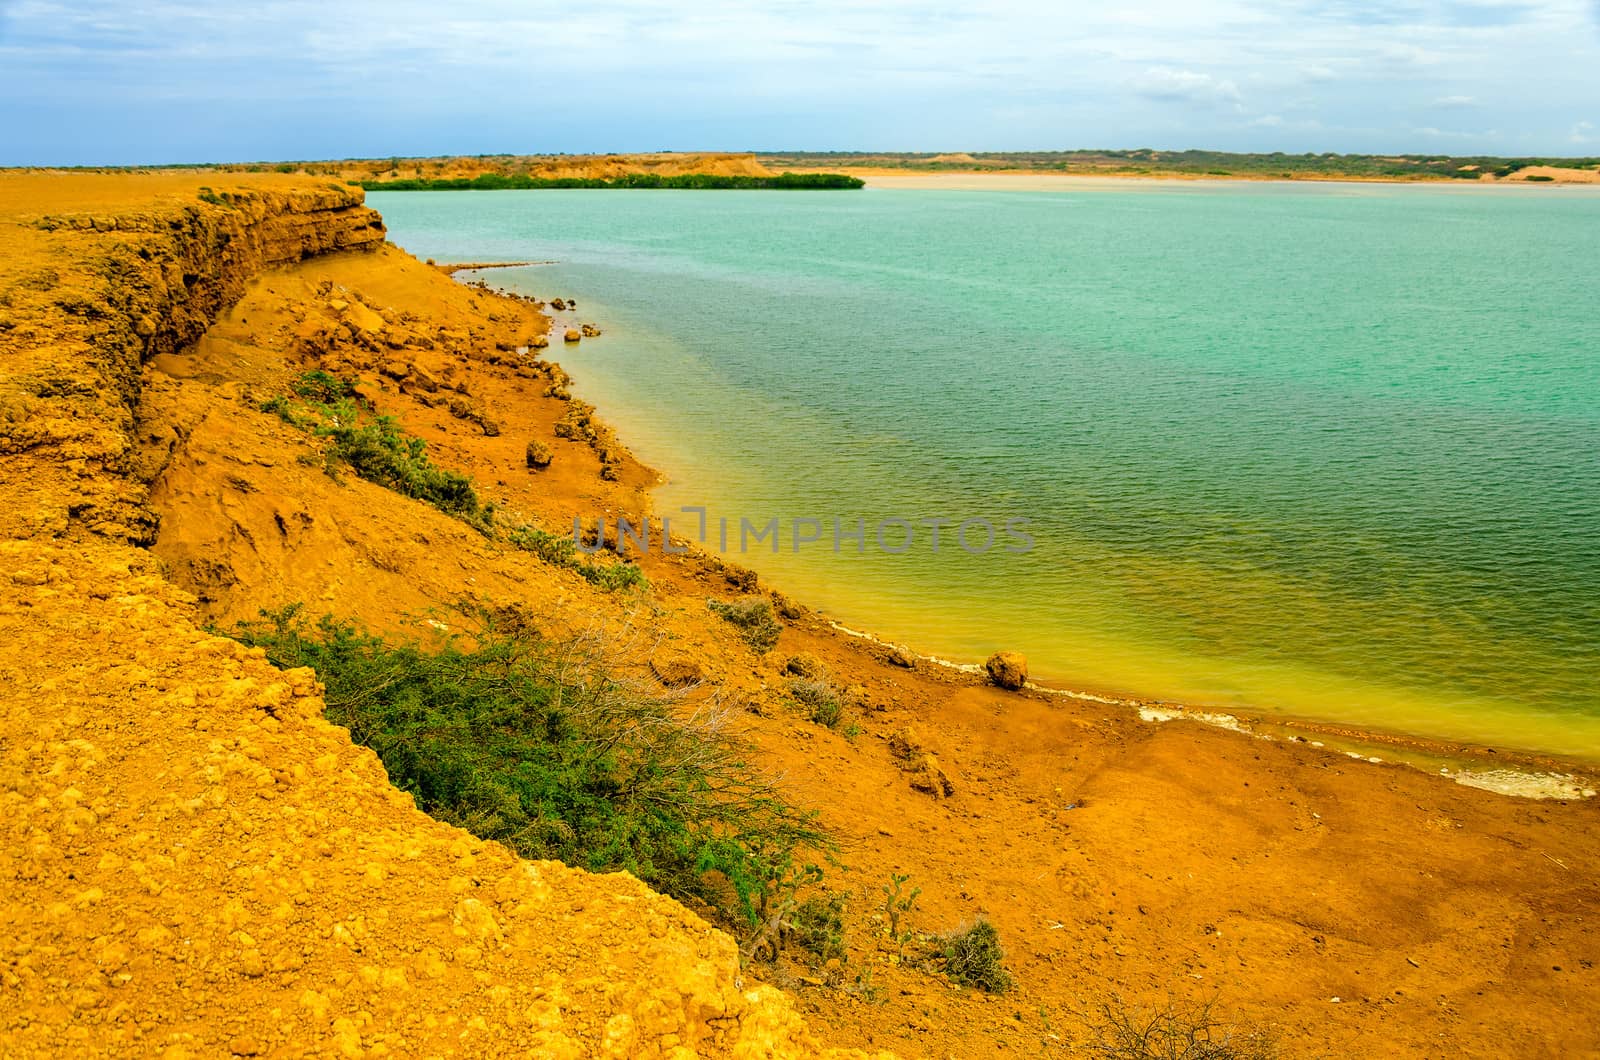 View of Honda Bay as seen from Punta Gallinas in La Guajira, Colombia